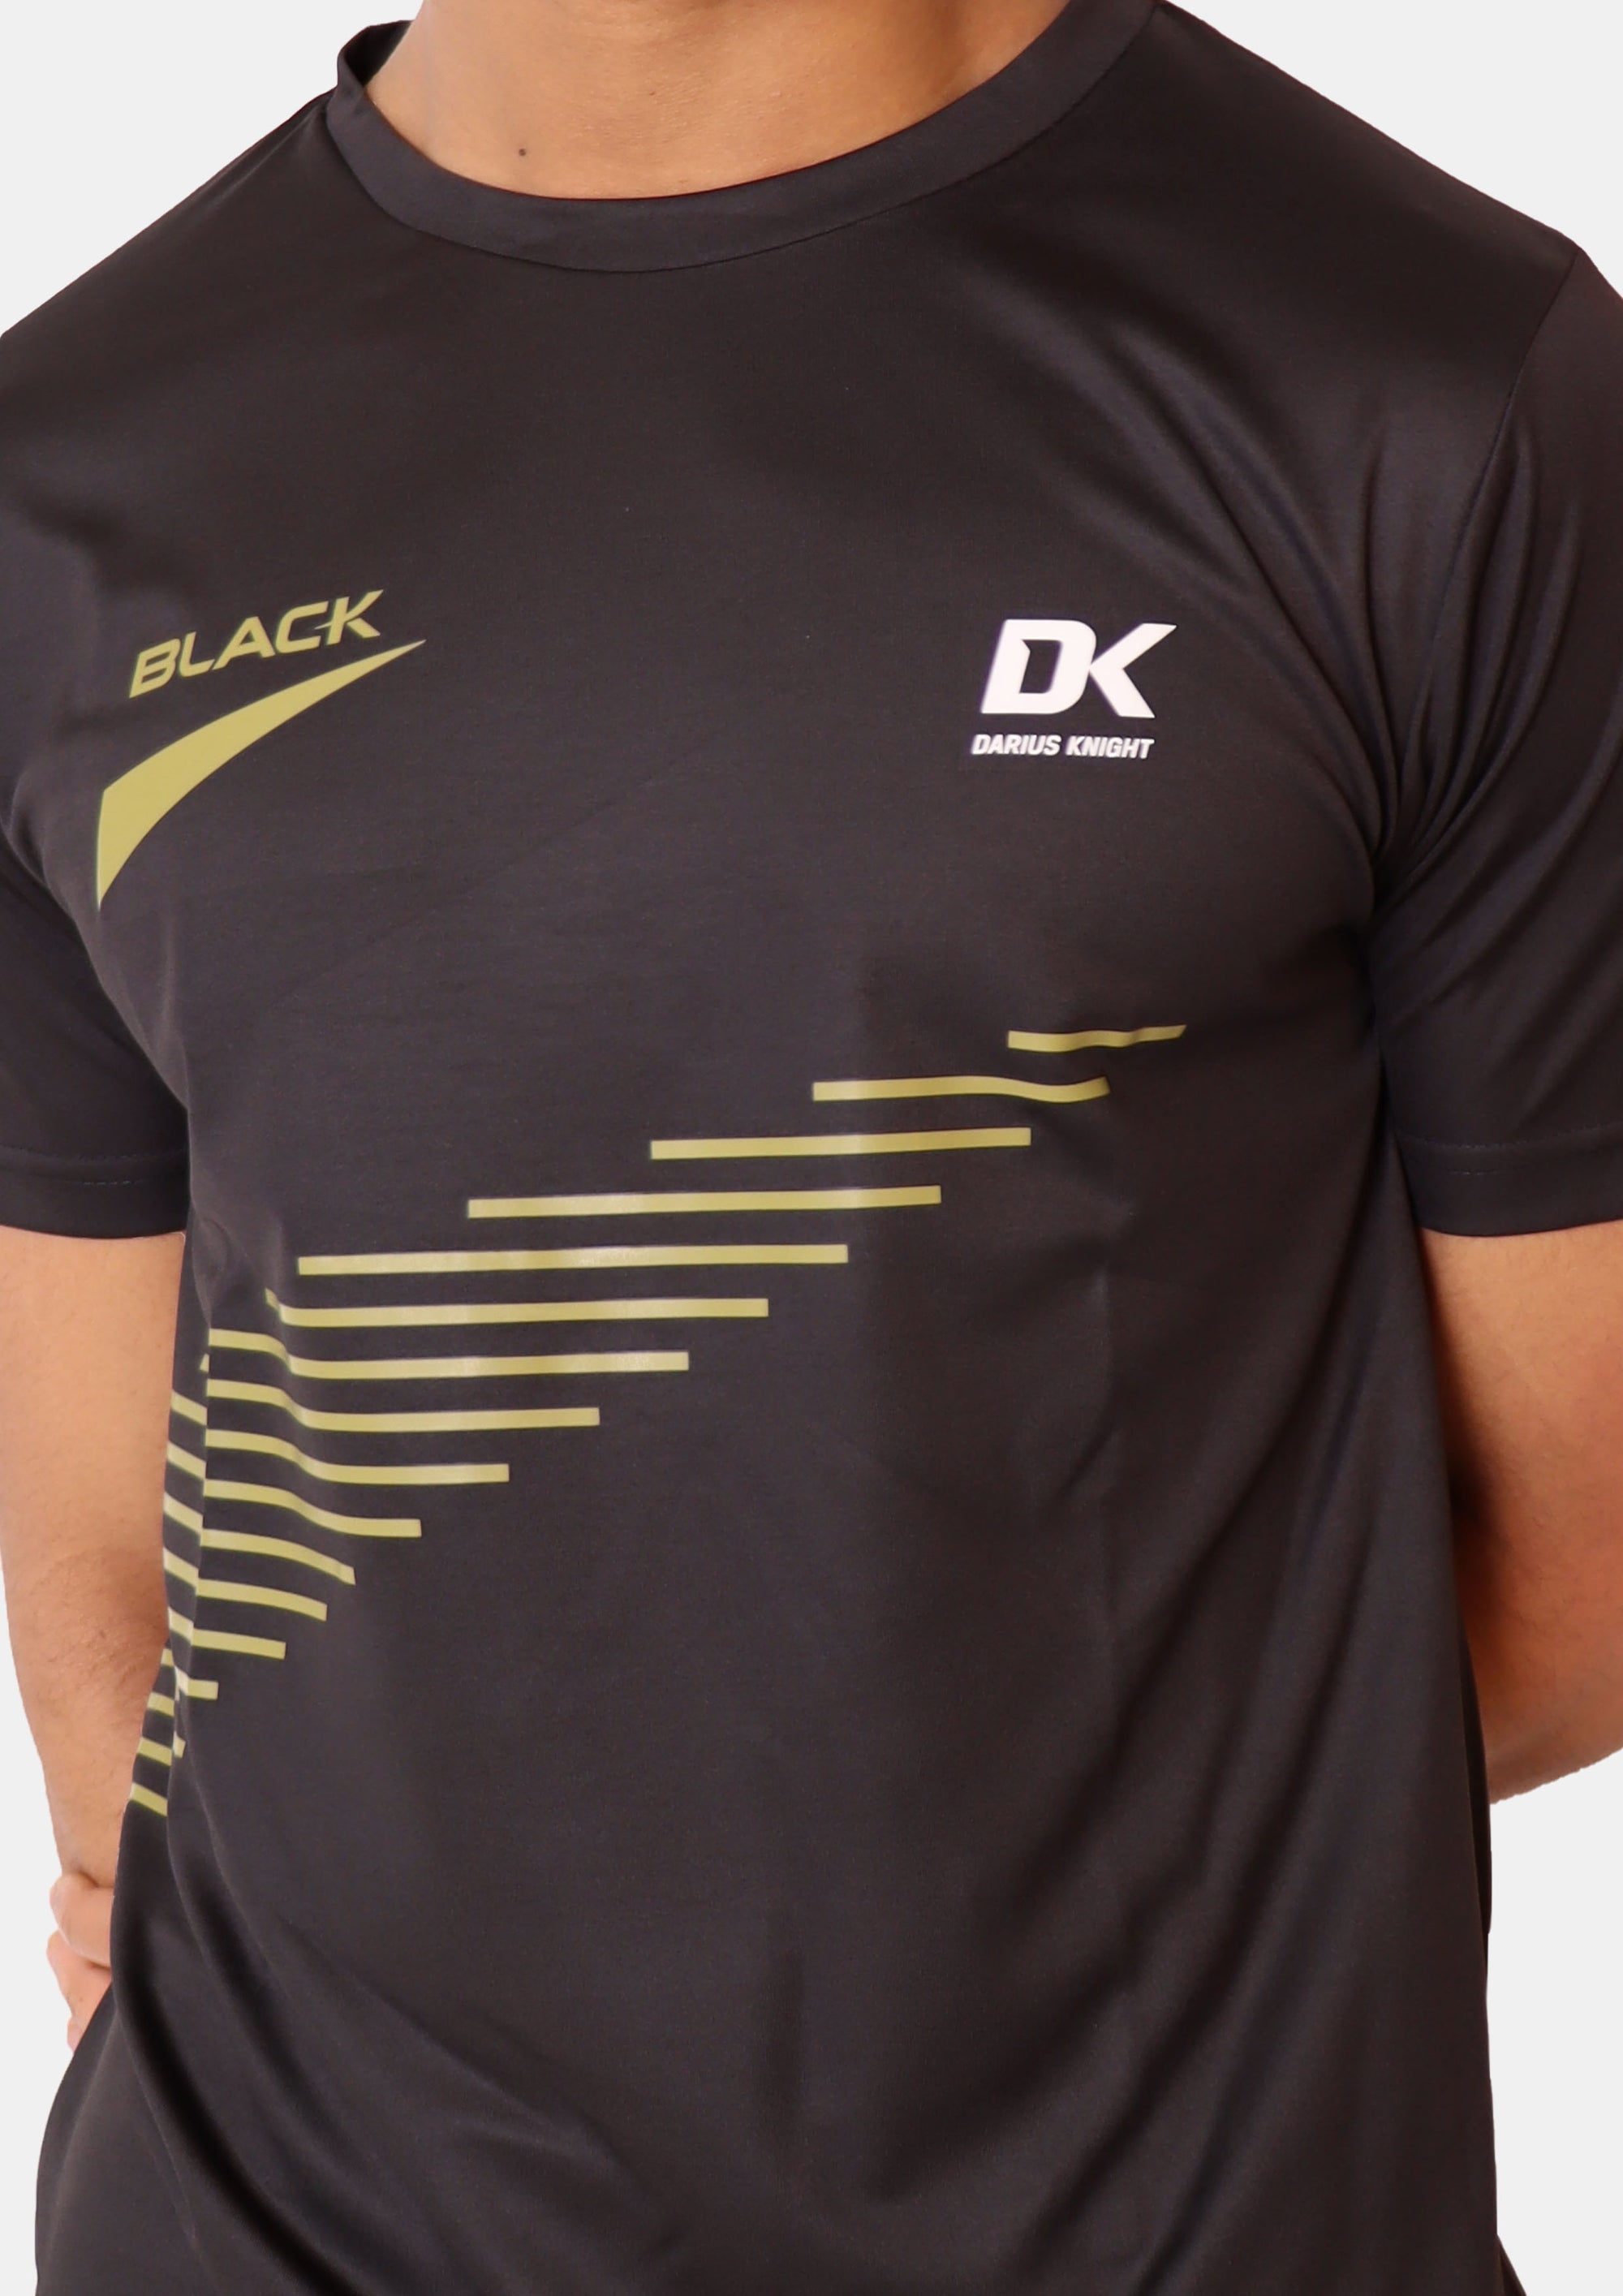 DK Black Training Shirt - DK Sports